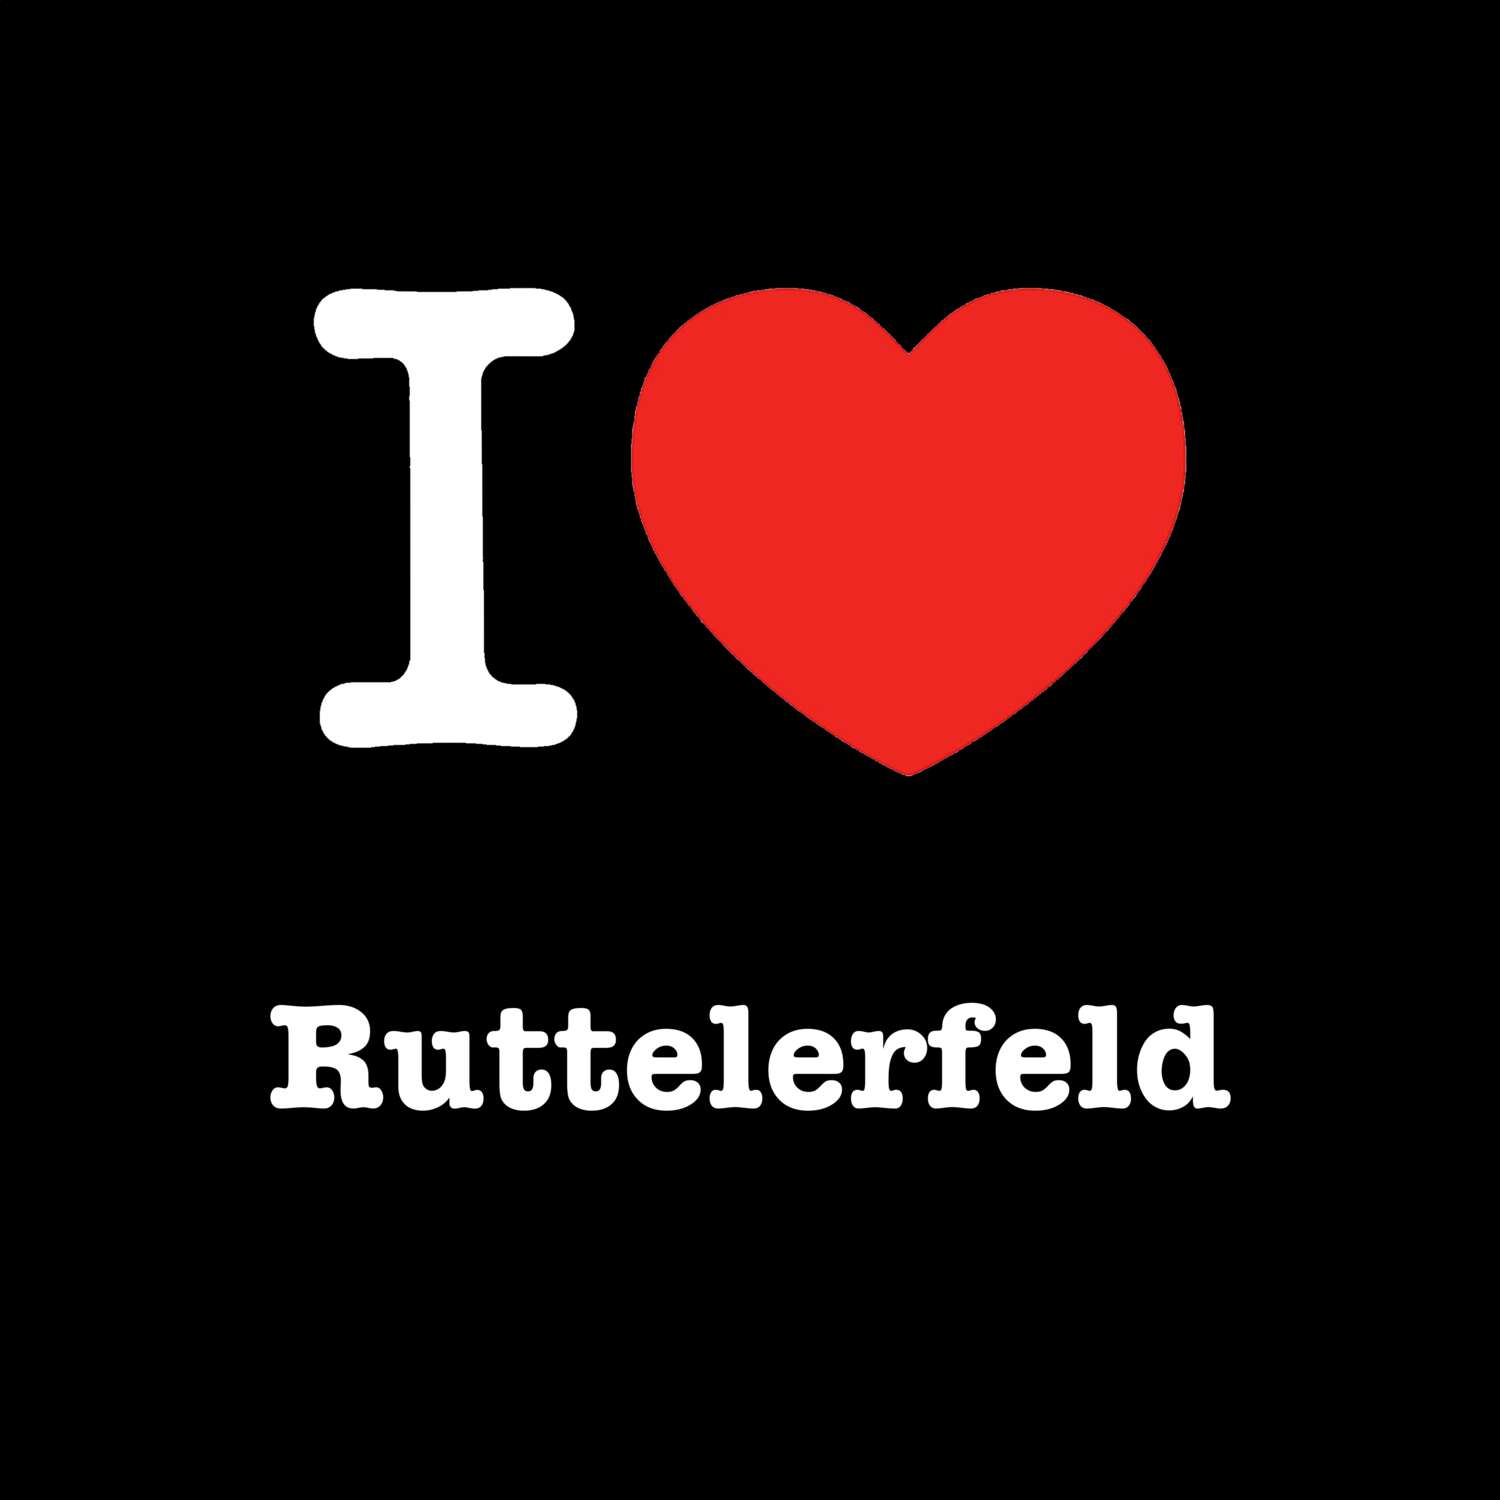 Ruttelerfeld T-Shirt »I love«